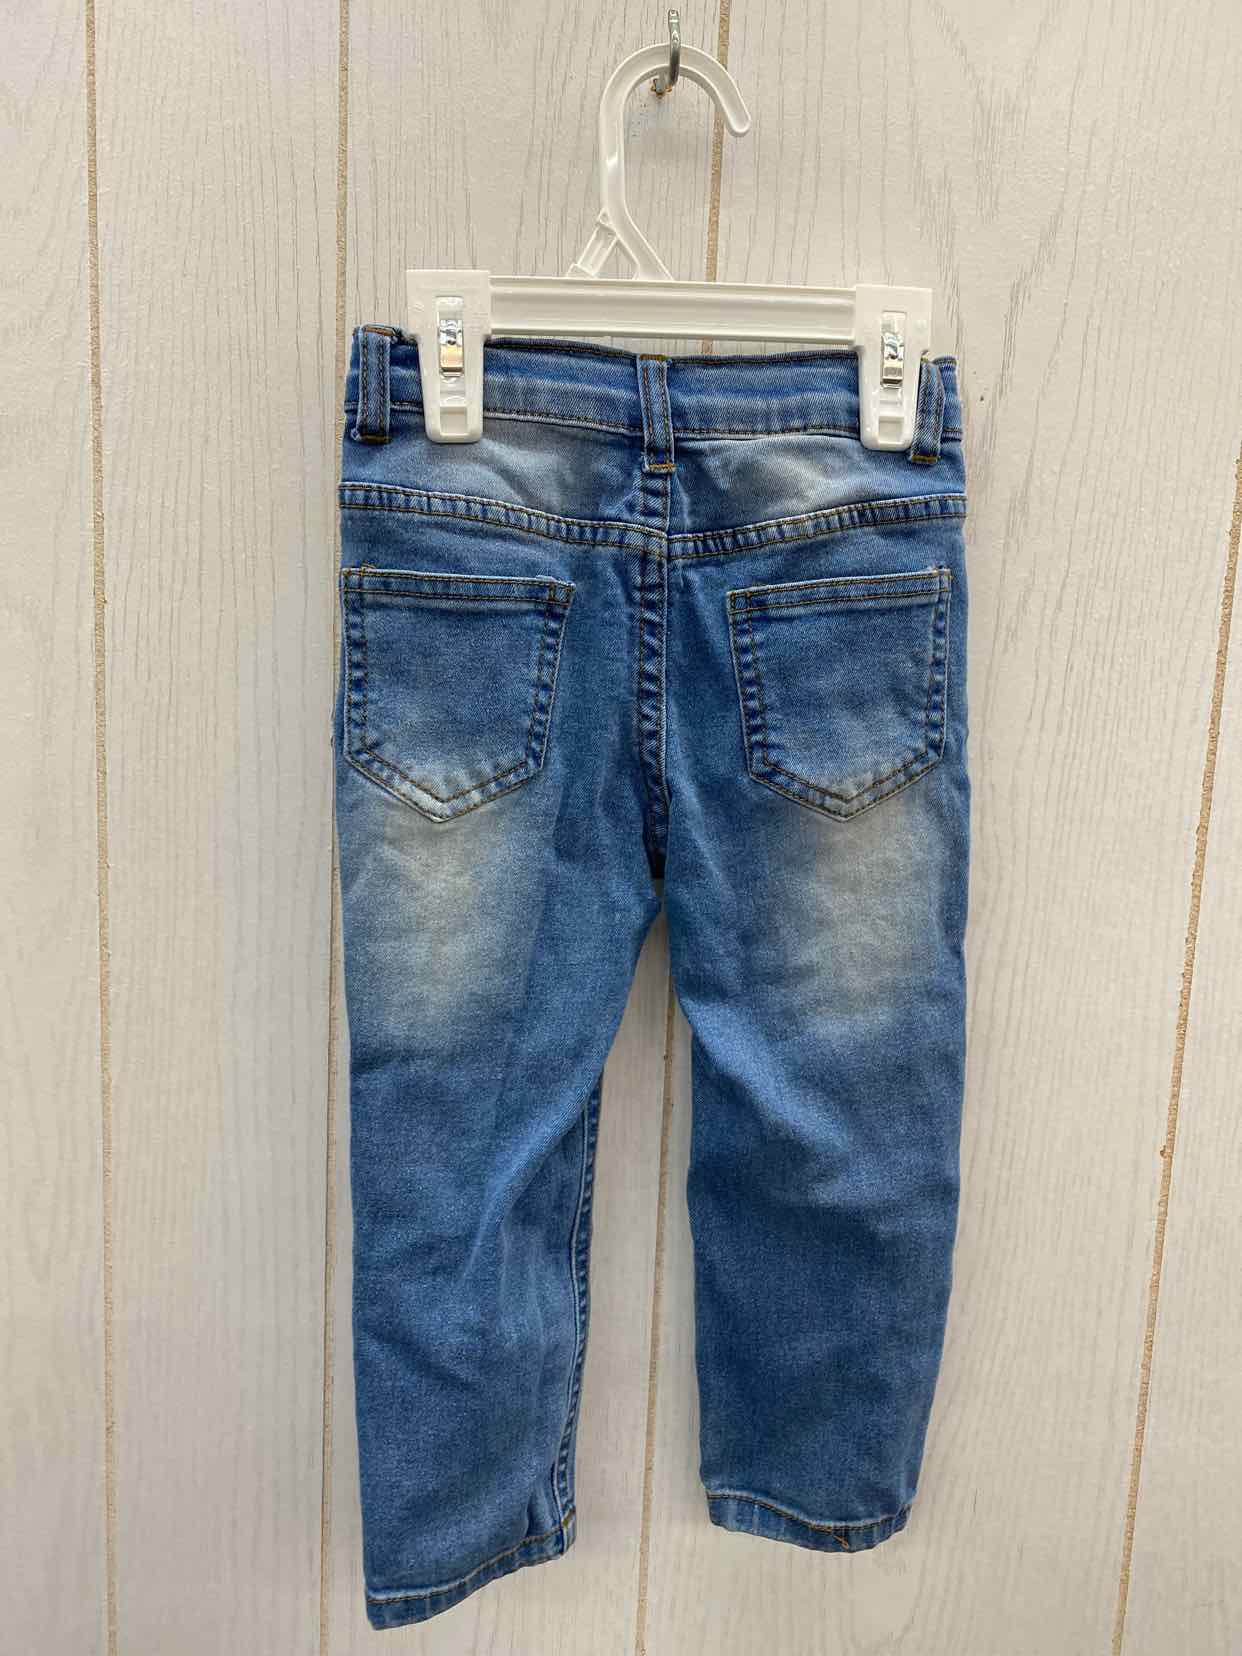 Boys Size 2/3 Jeans